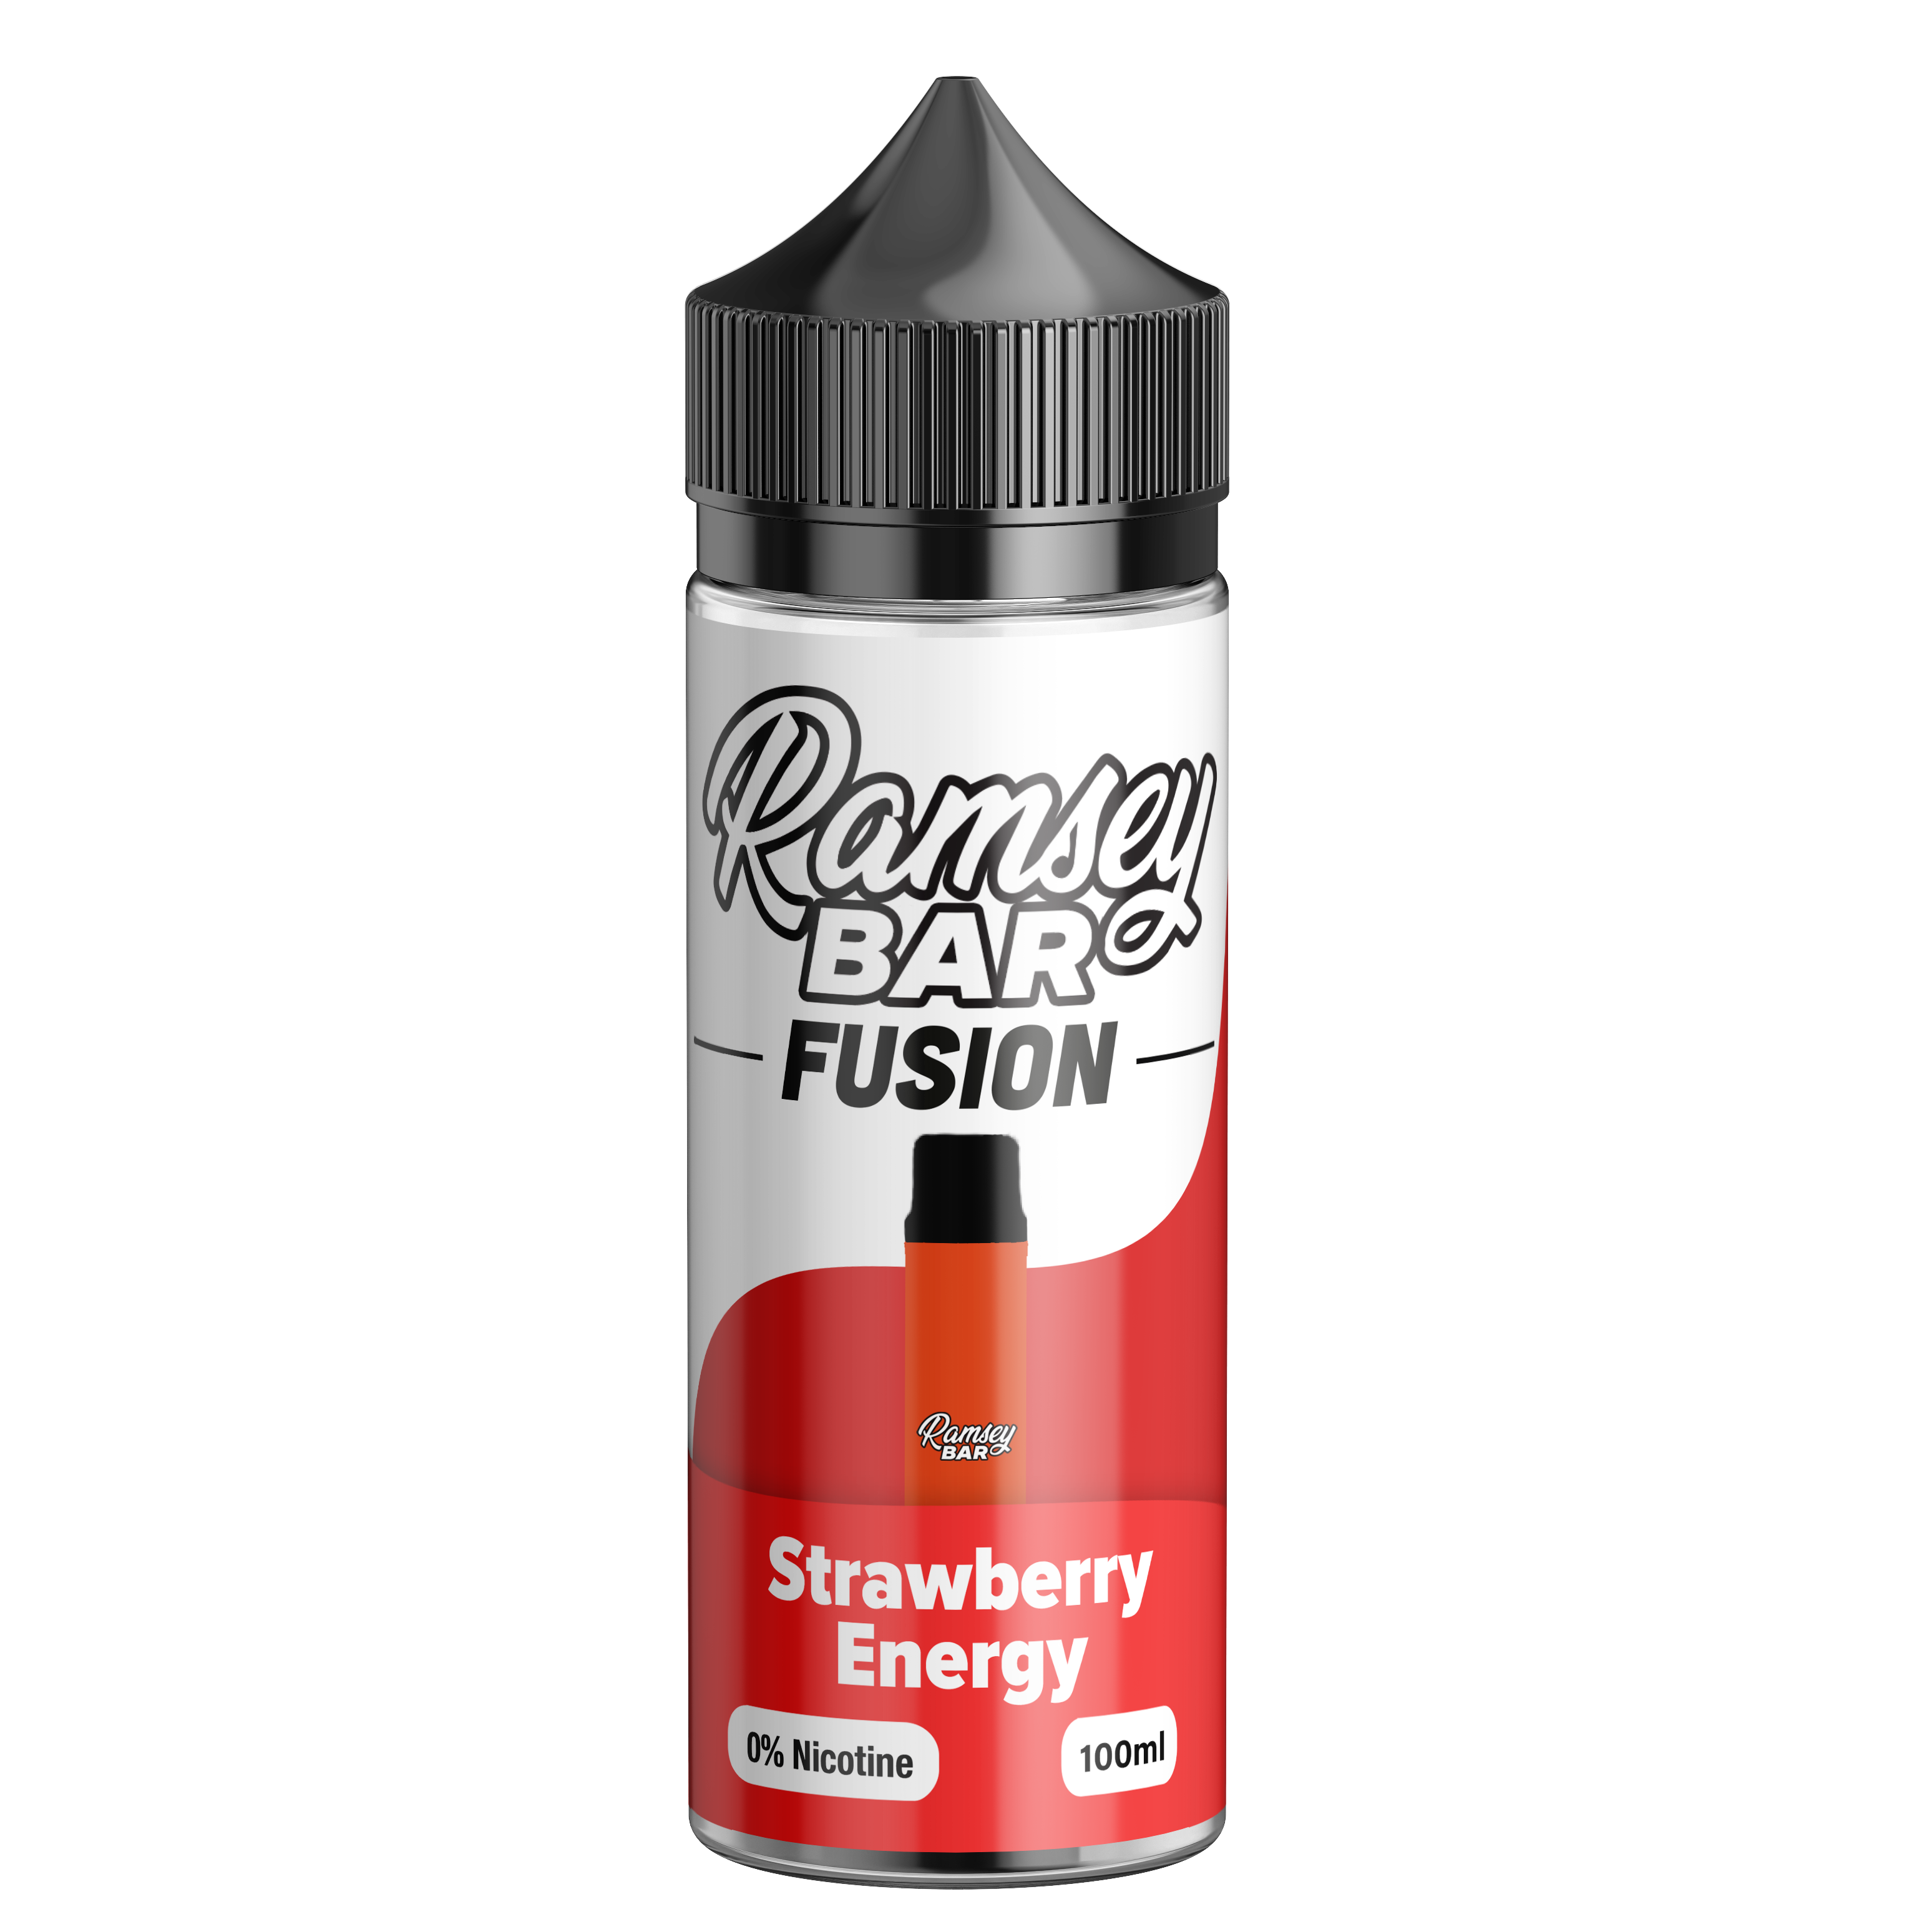 Ramsey Bar Fusion Strawberry Energy 100ml Shortfill E-Liquid